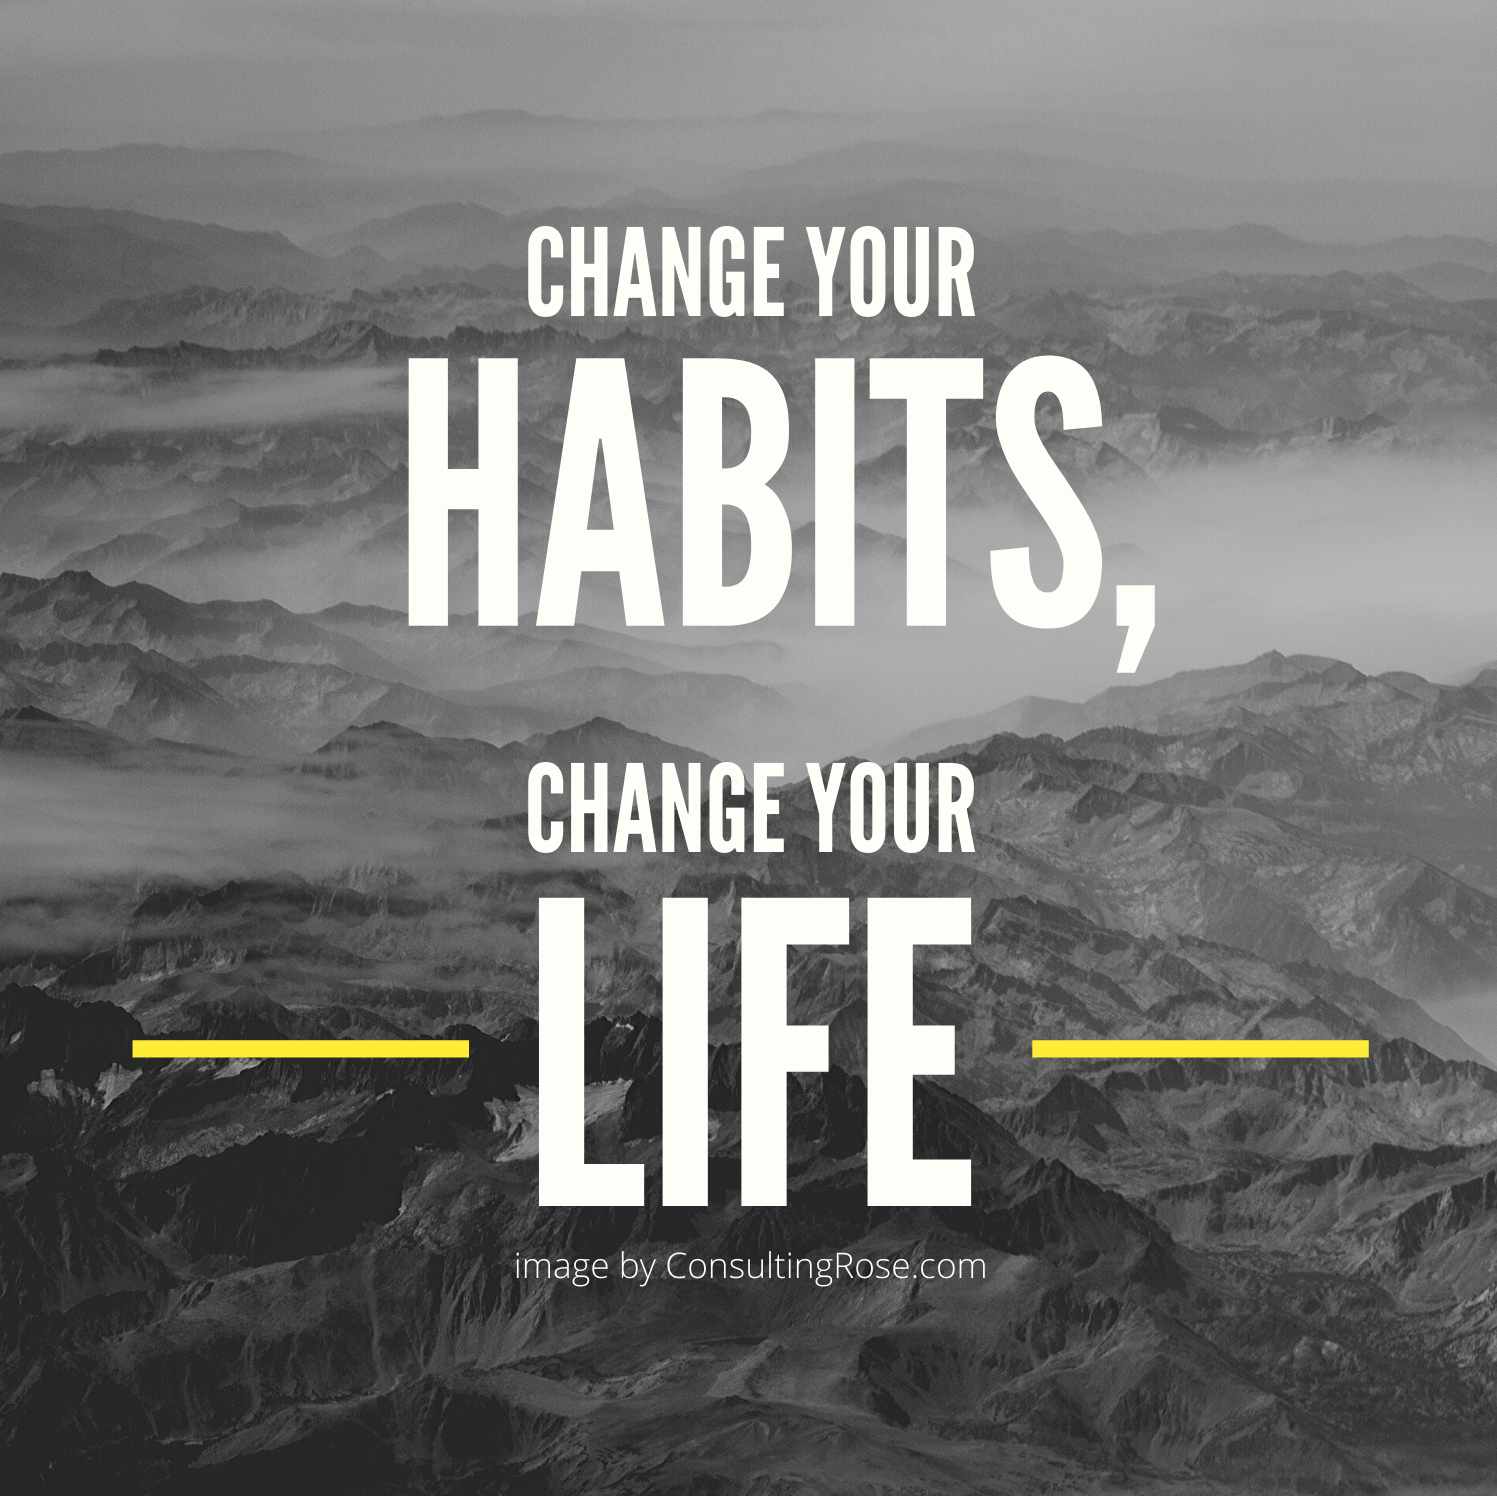 Change your habits, change your life
								